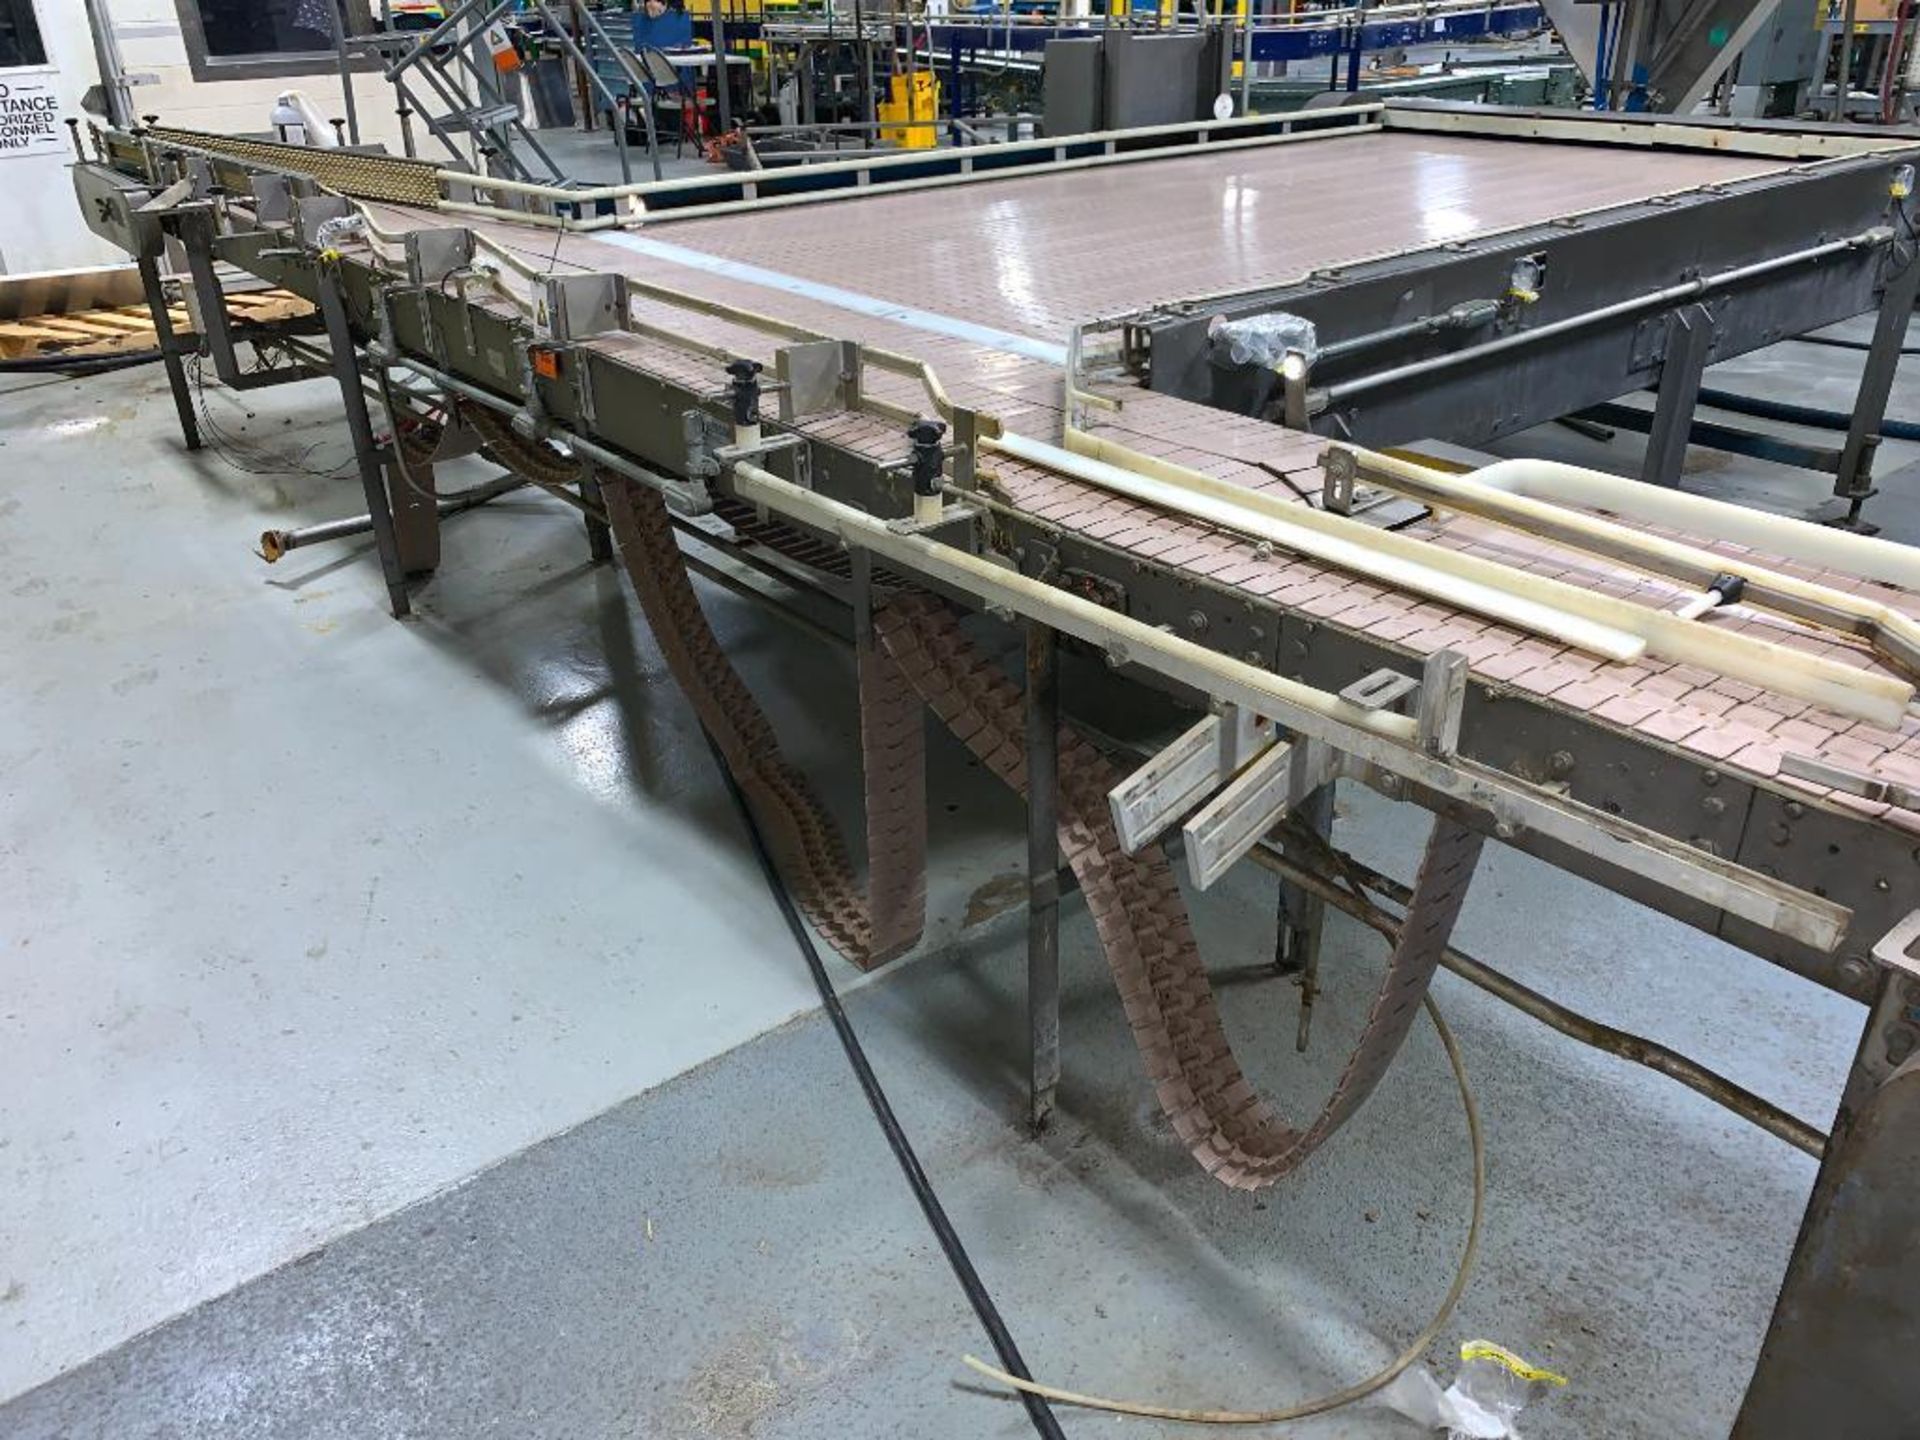 Nercon mild steel 3-lane bottle conveyor, 20 ft. overall, motor and drive